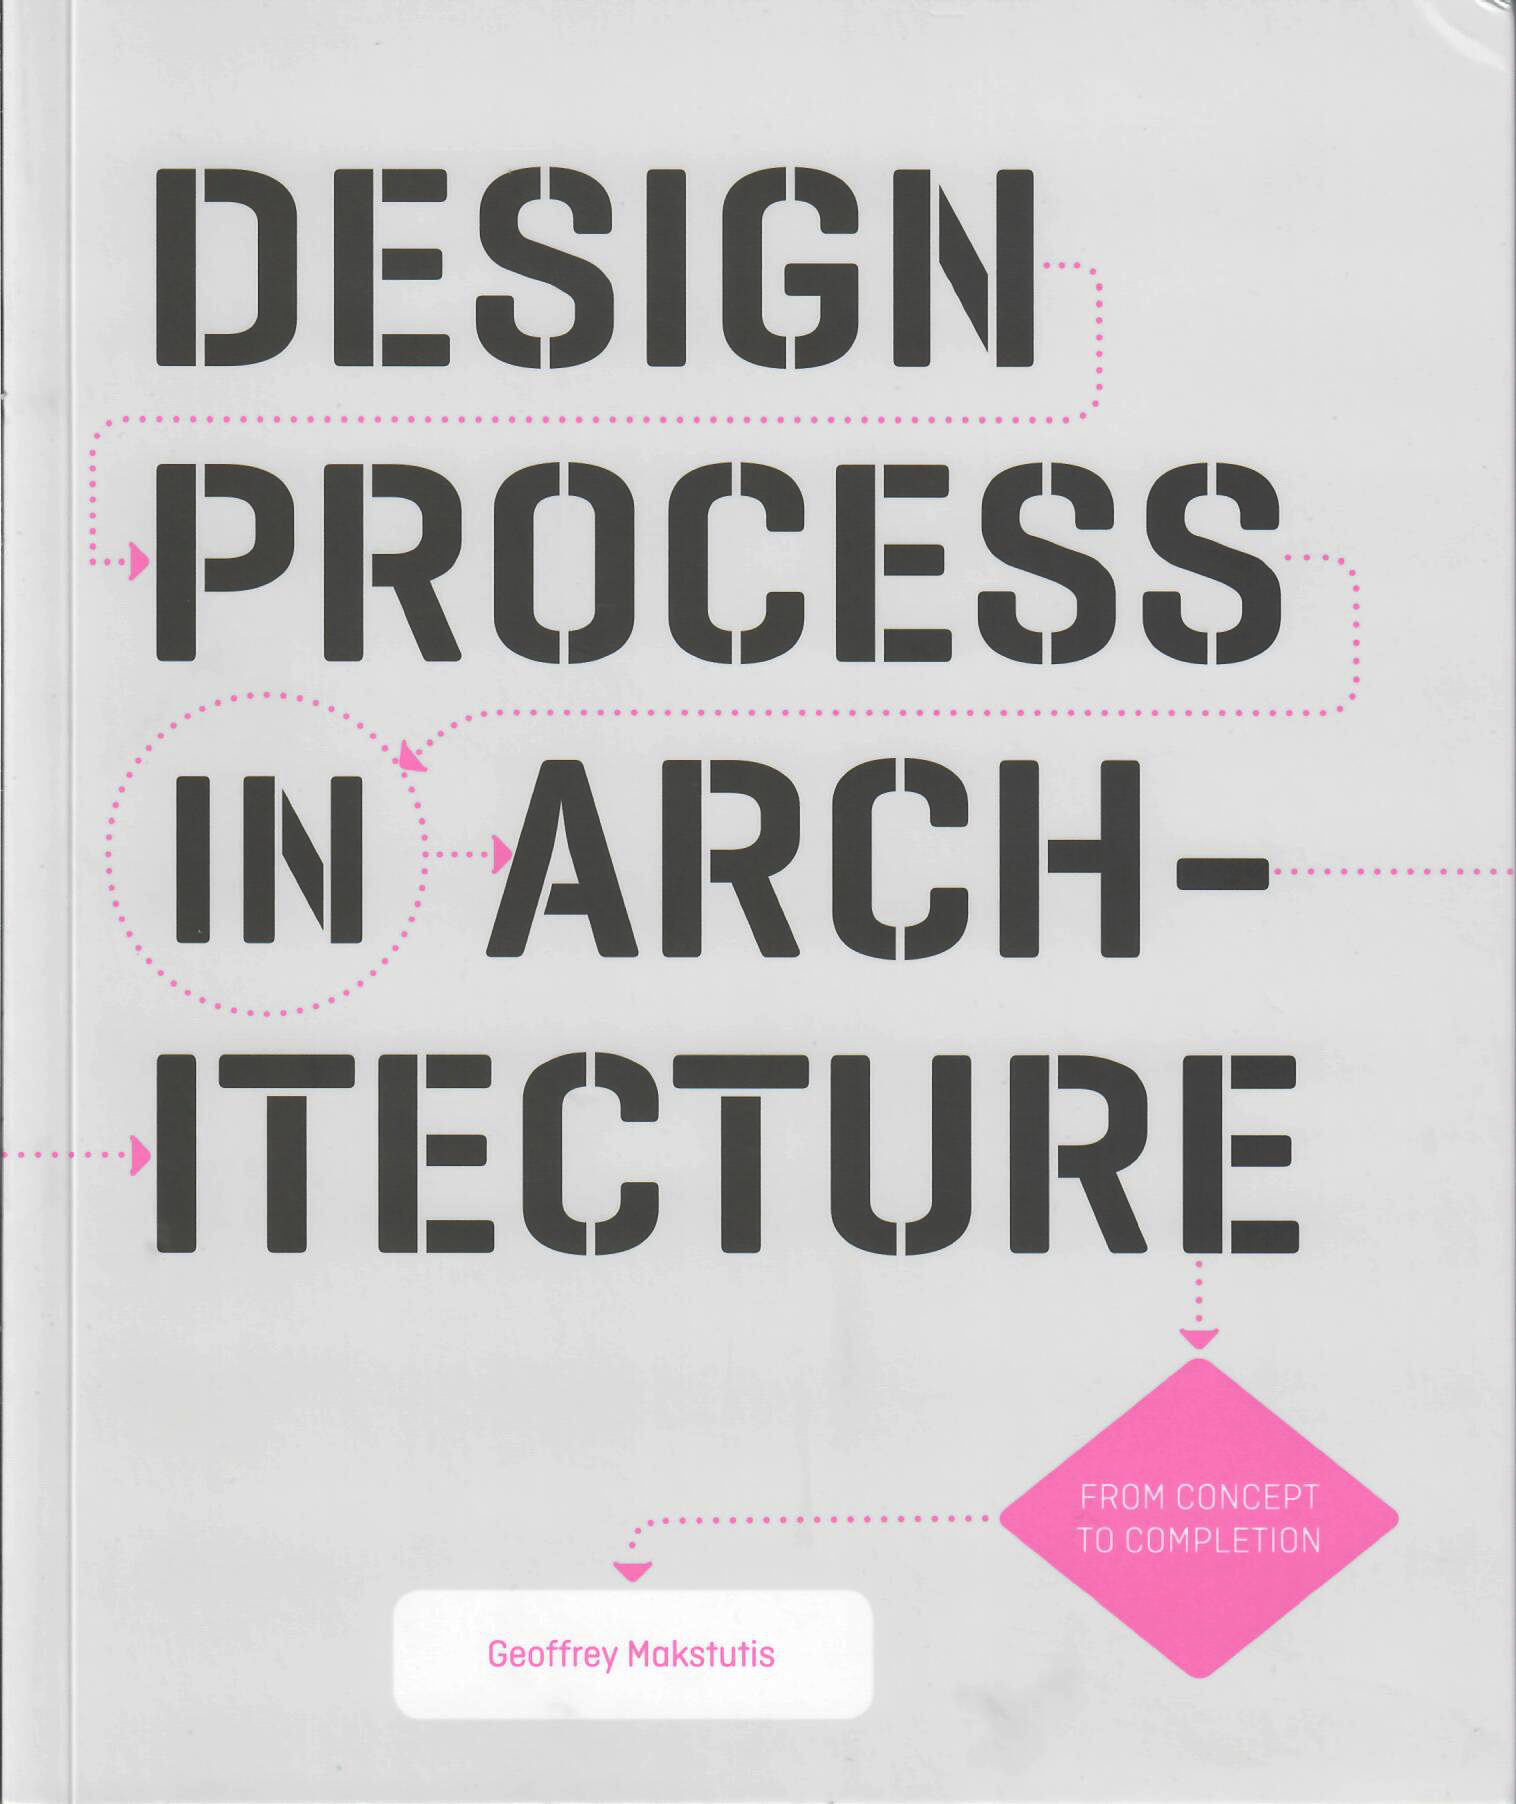 Cover of Geoffrey Makstutis’ book “Design Process in Architecture"